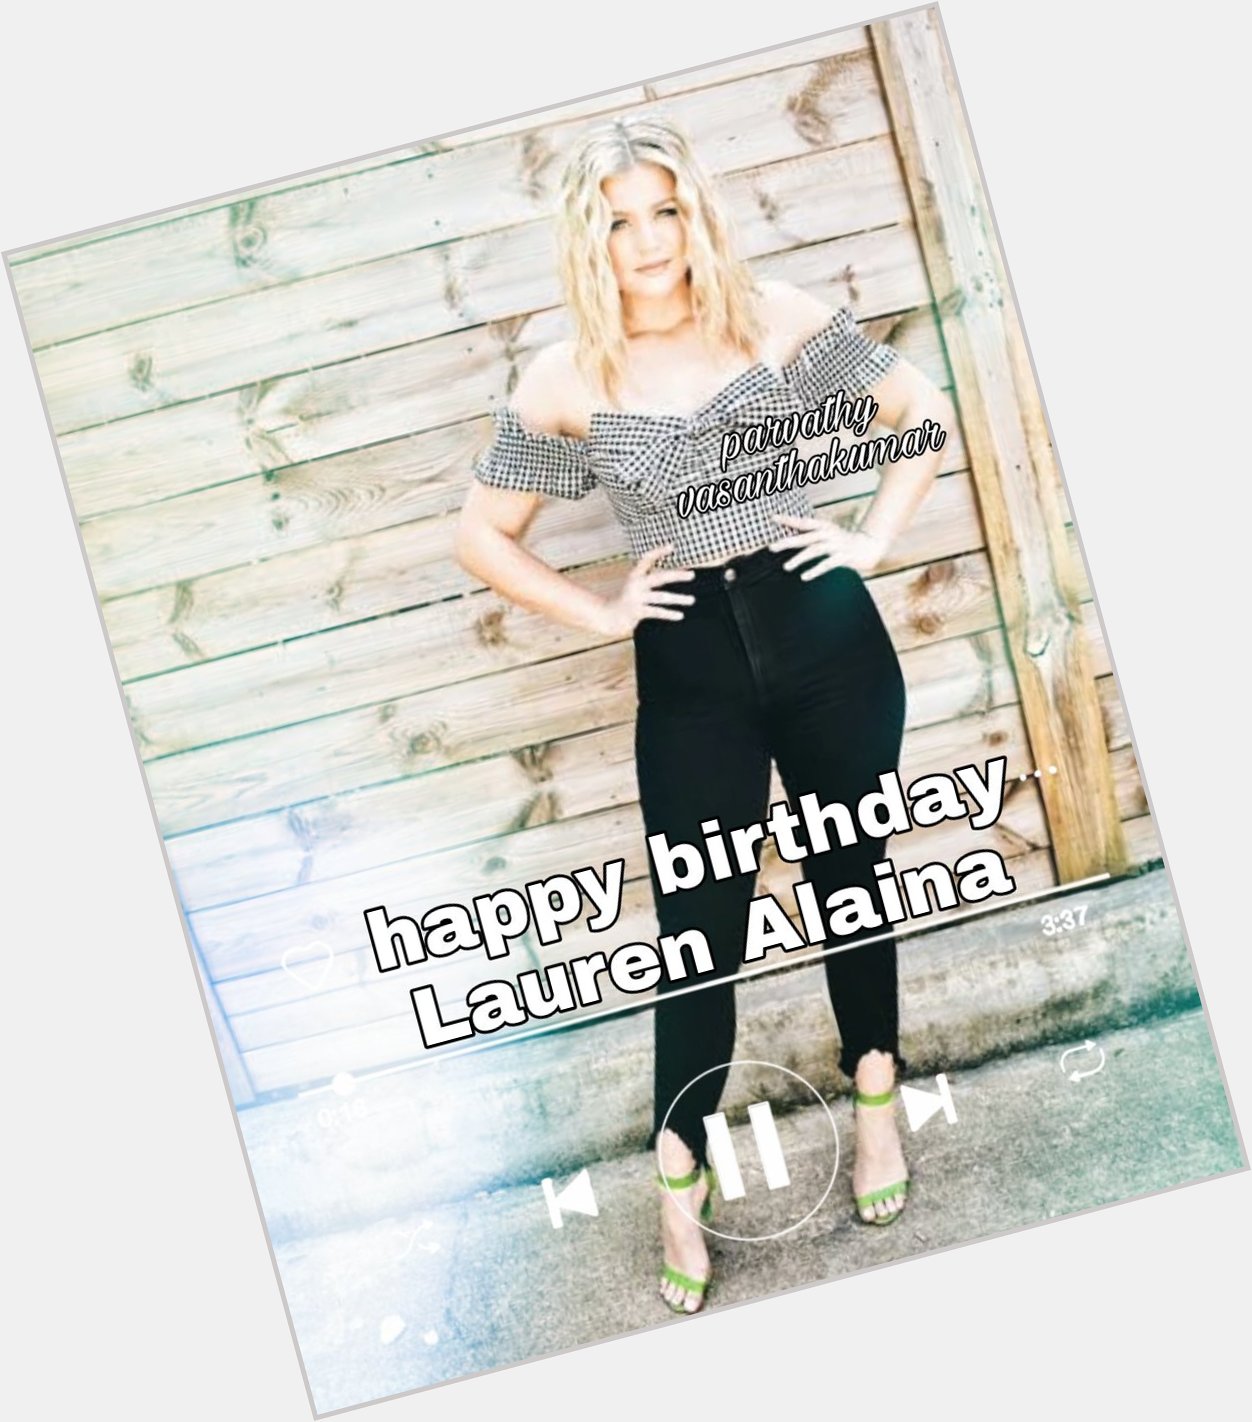 Happy birthday Lauren Alaina 